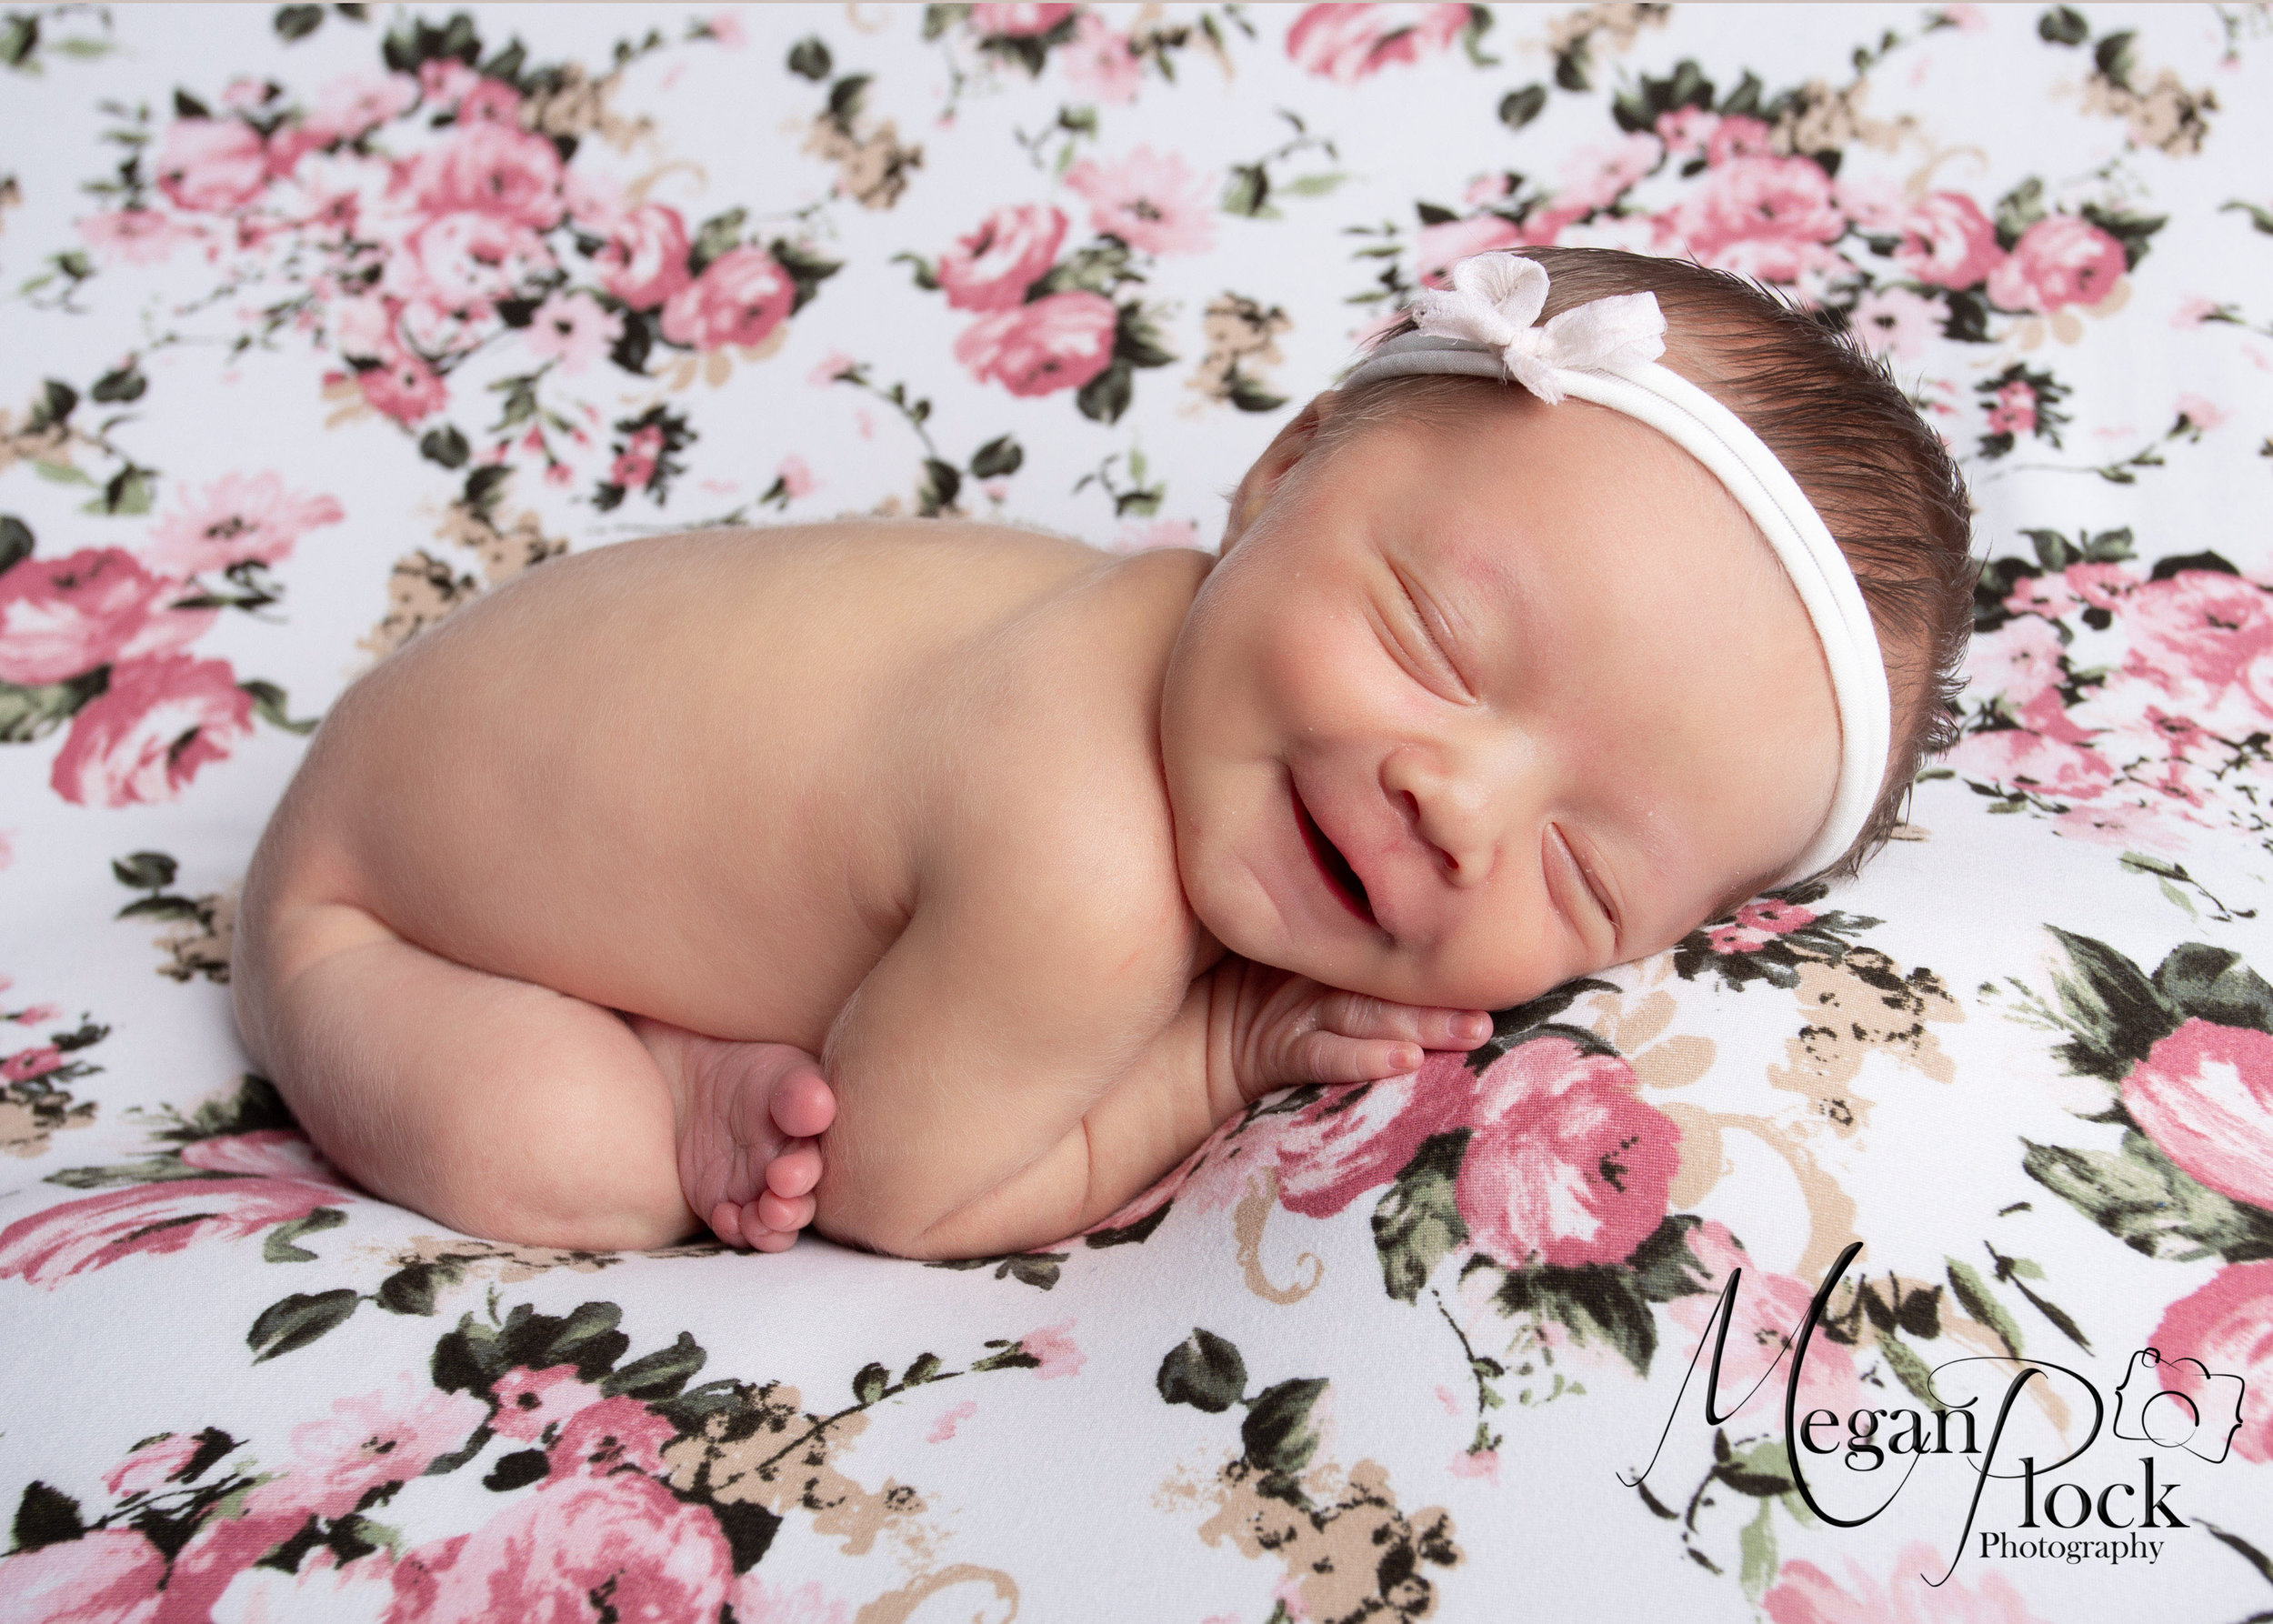 Megan-Plock-Photography-Holly-Newborn Baby-4.jpg